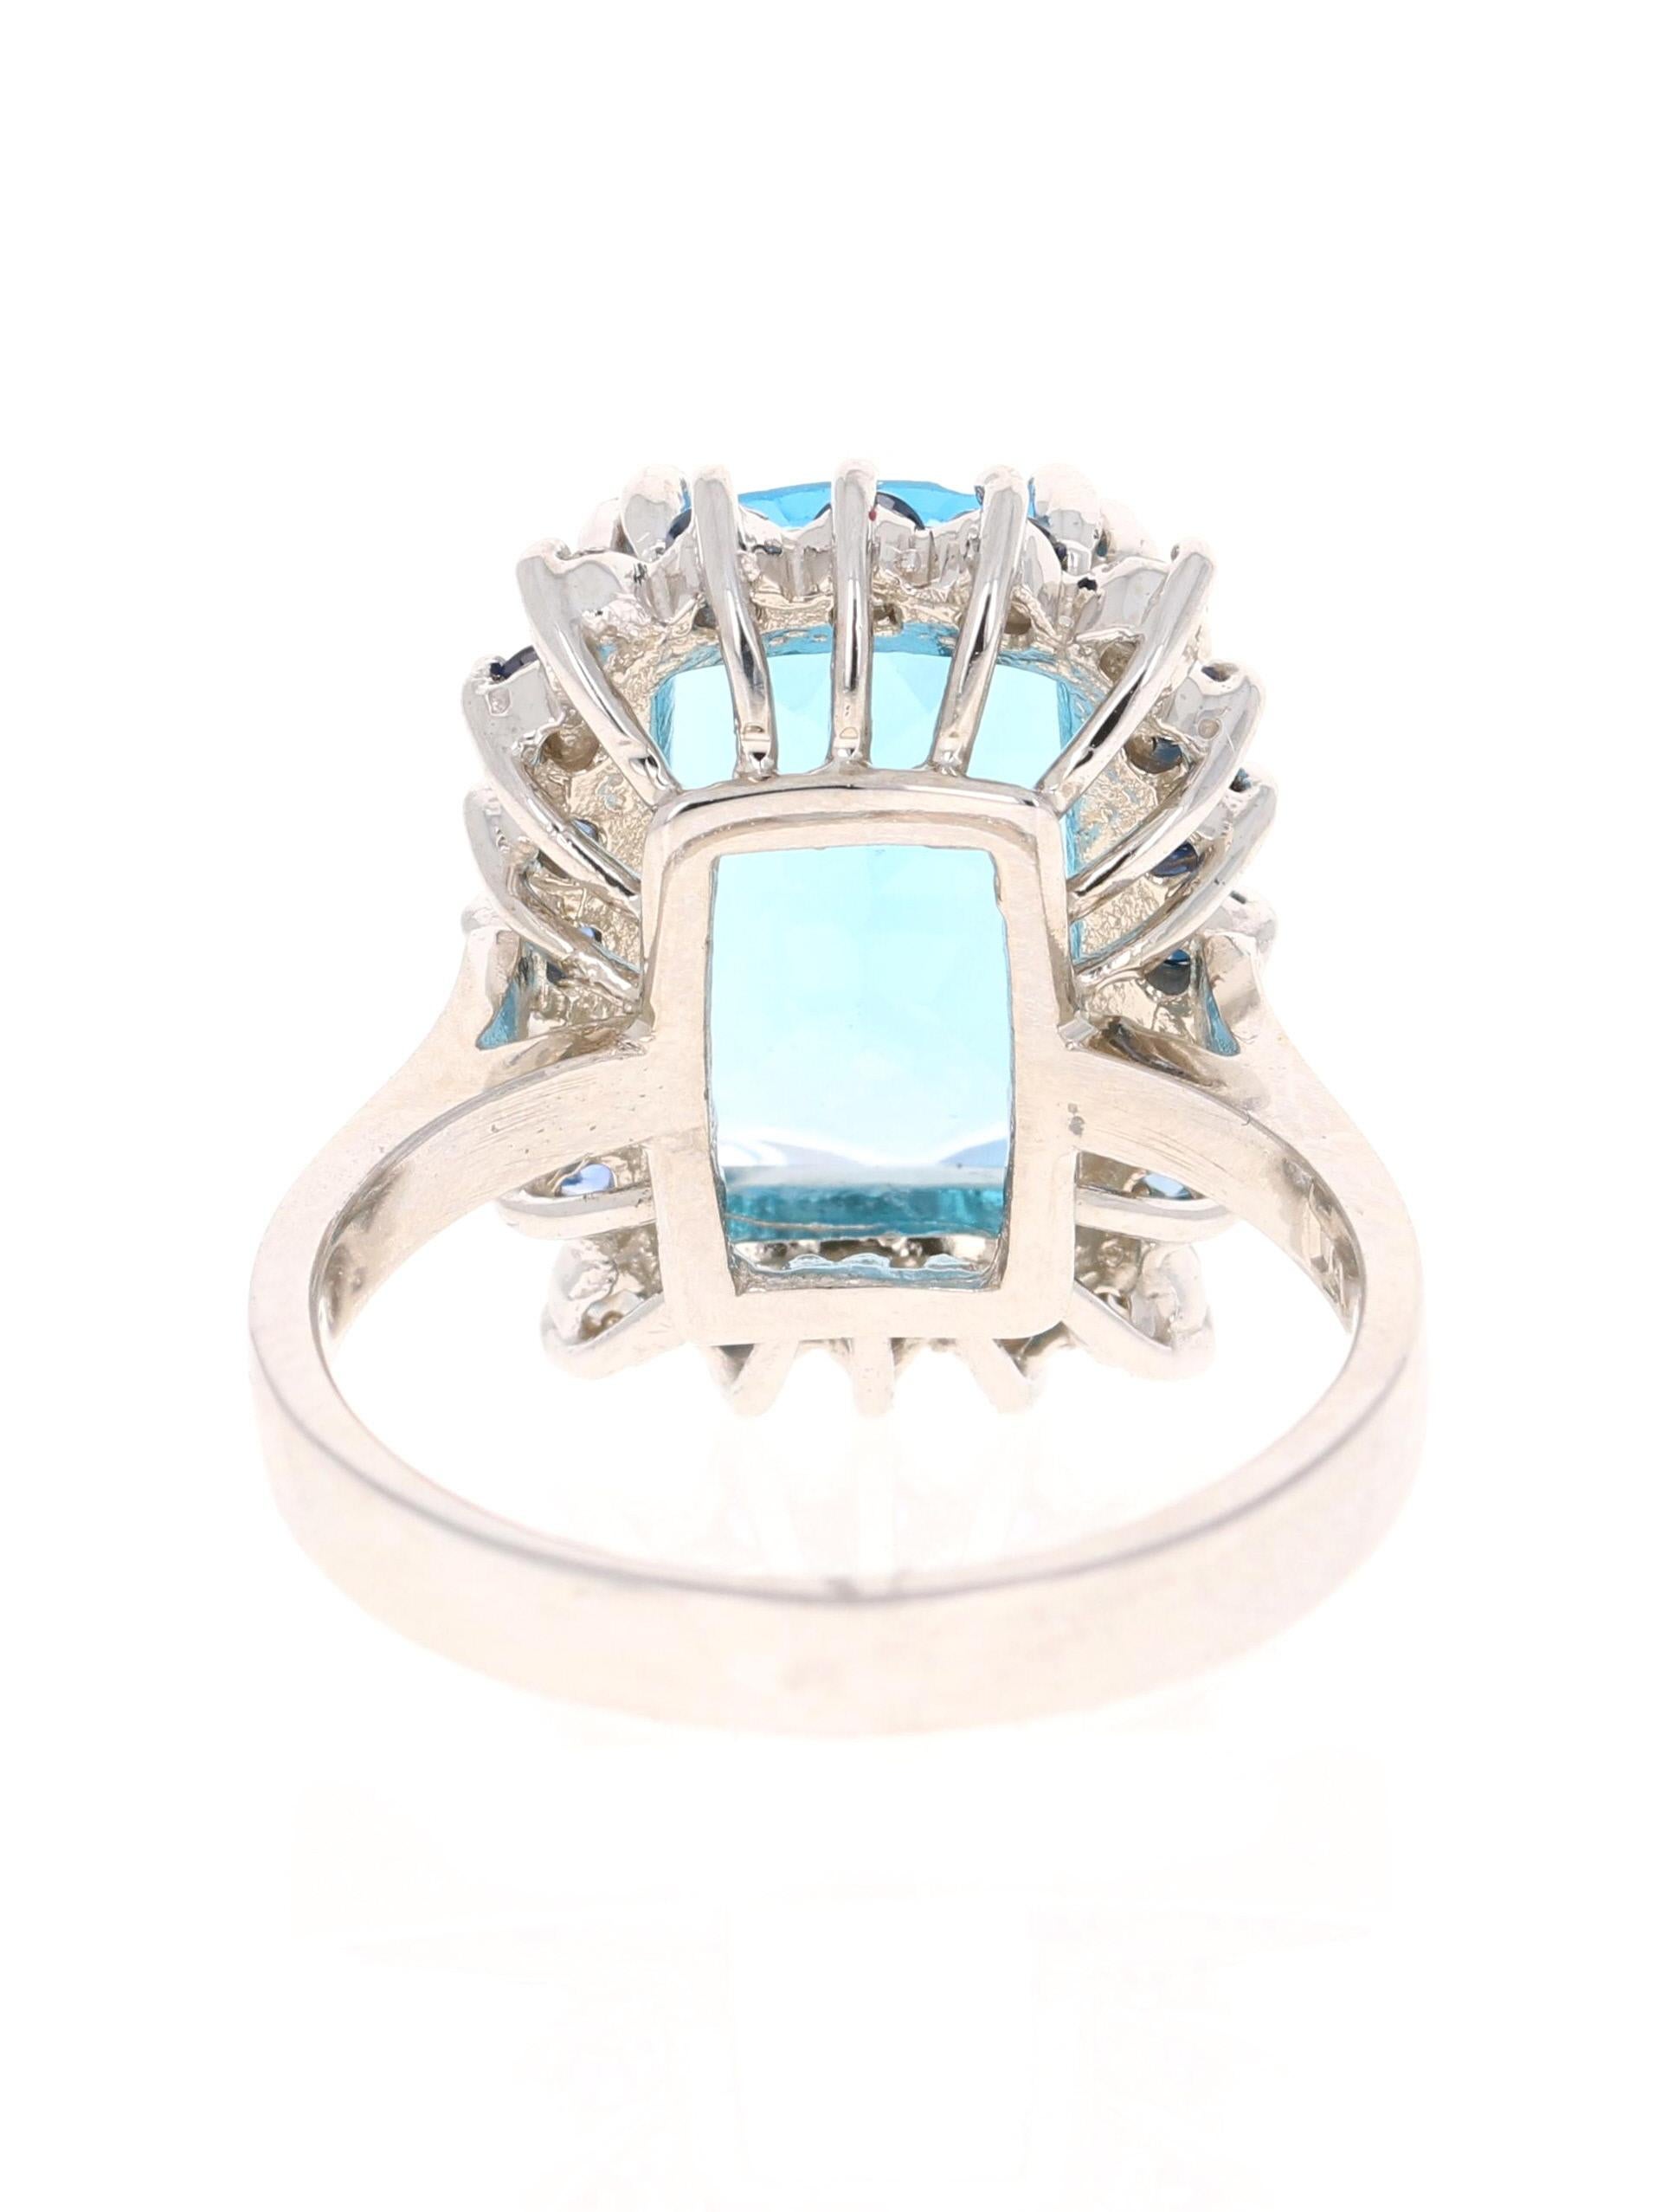 Oval Cut 7.52 Carat Blue Topaz Sapphire Diamond 14 Karat White Gold Ring For Sale